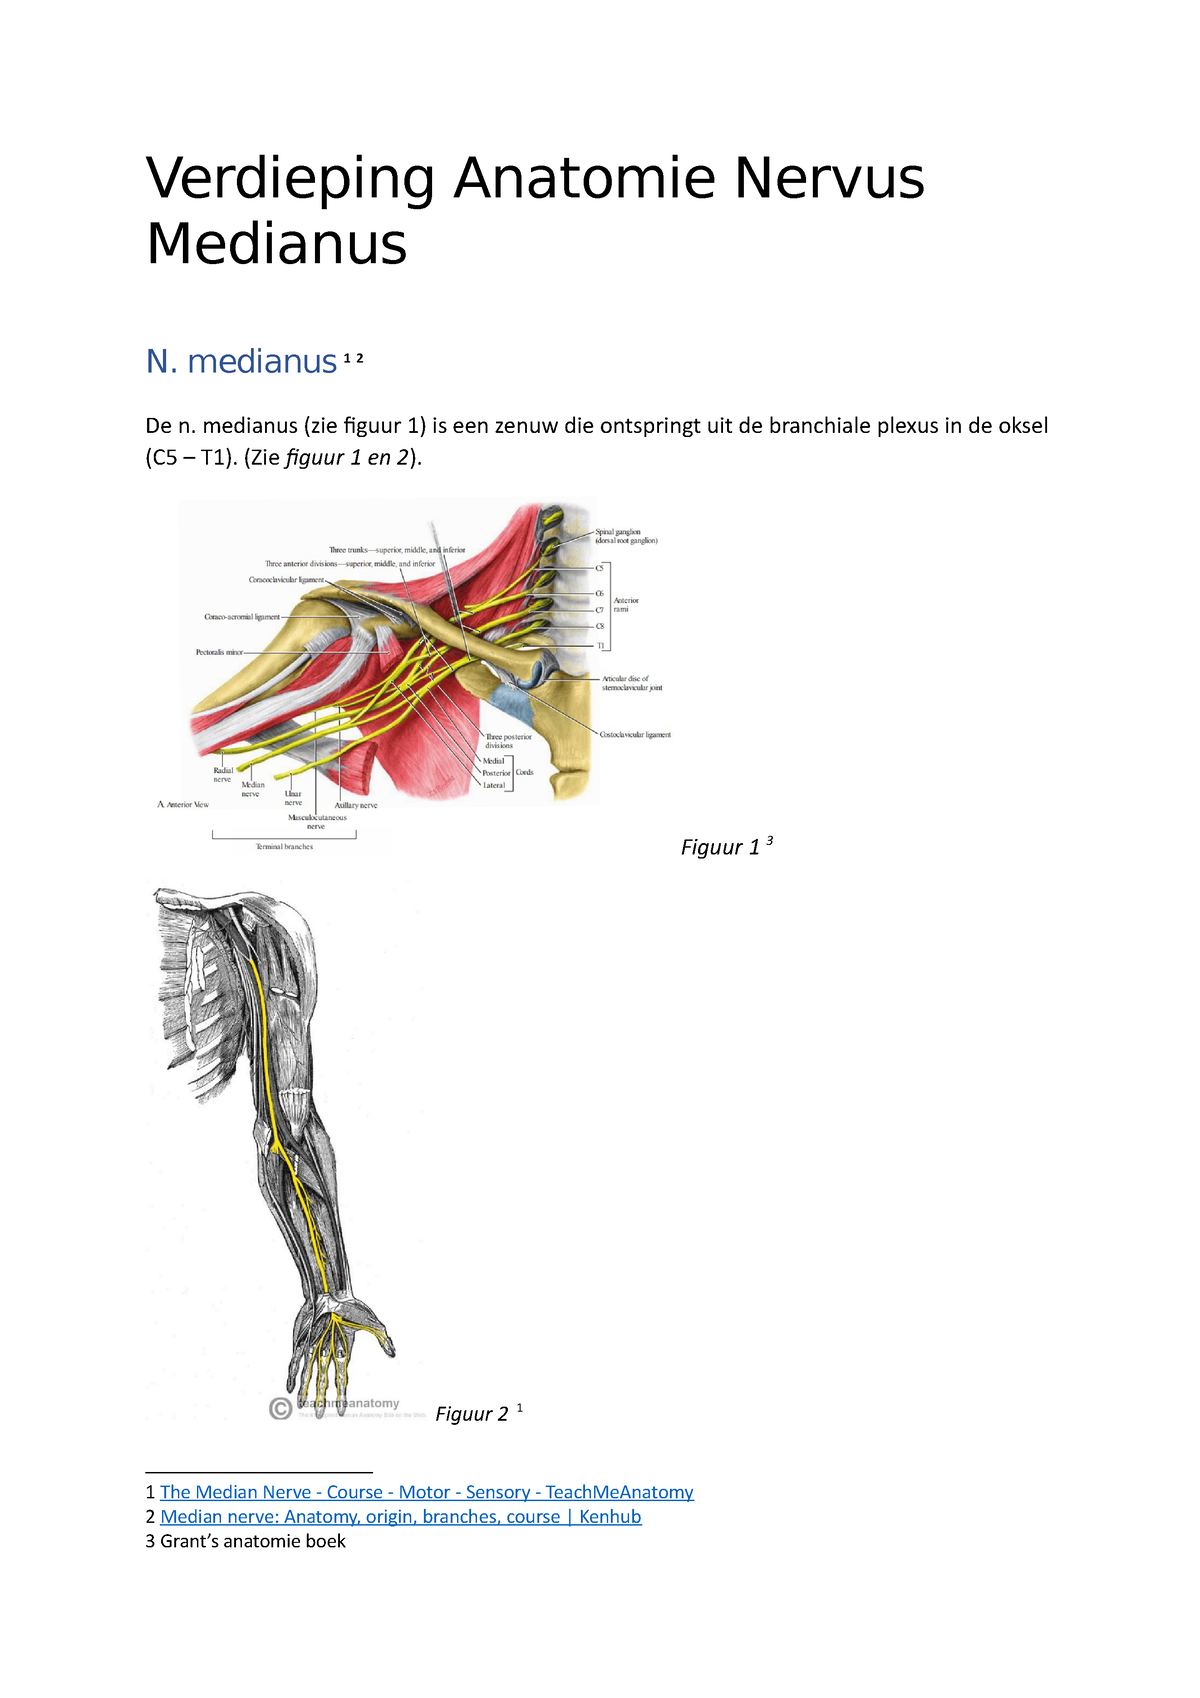 The Median Nerve - Course - Motor - Sensory - TeachMeAnatomy